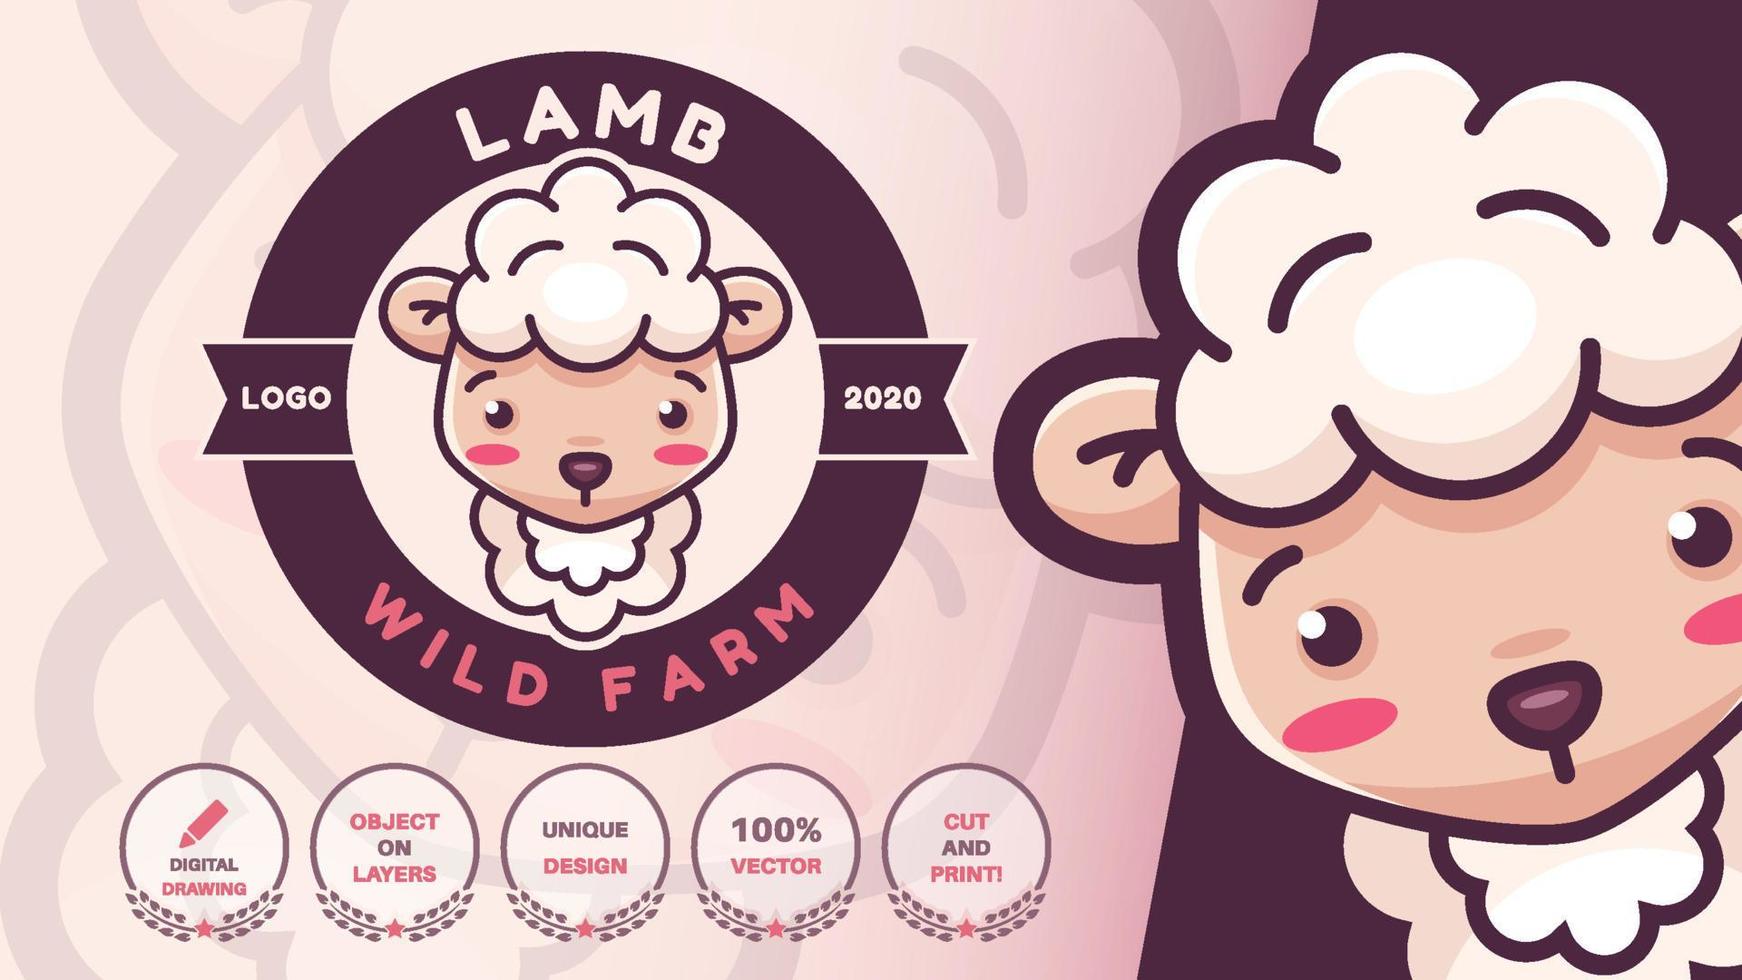 seriefigur bedårande djur lamm logotyp vektor